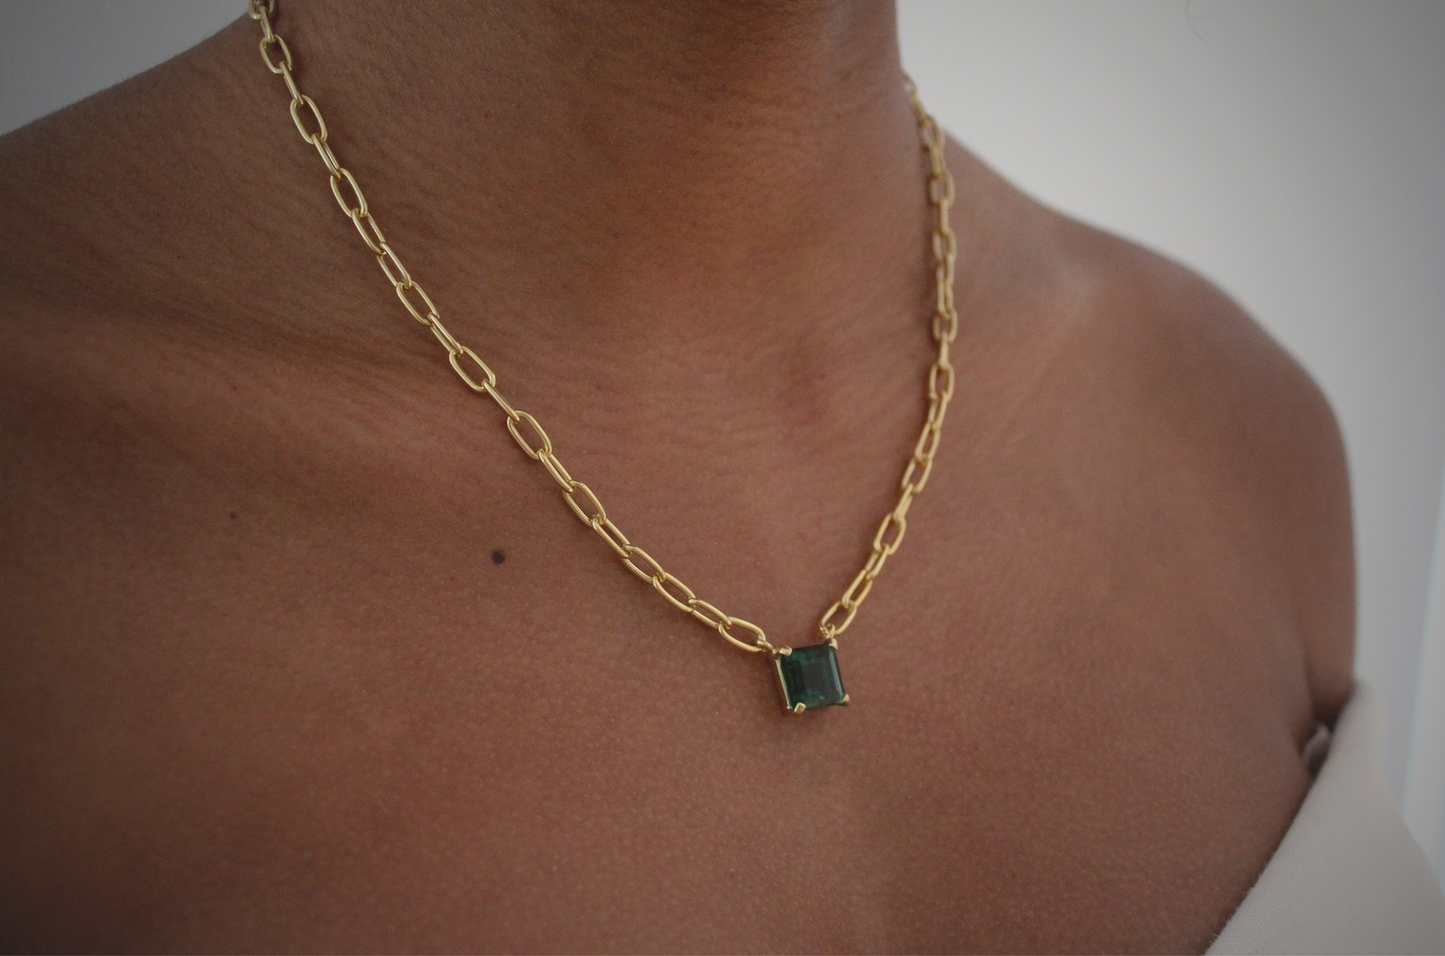 18K Gold Plated Green Quartz Link Necklace featuring green quartz stones